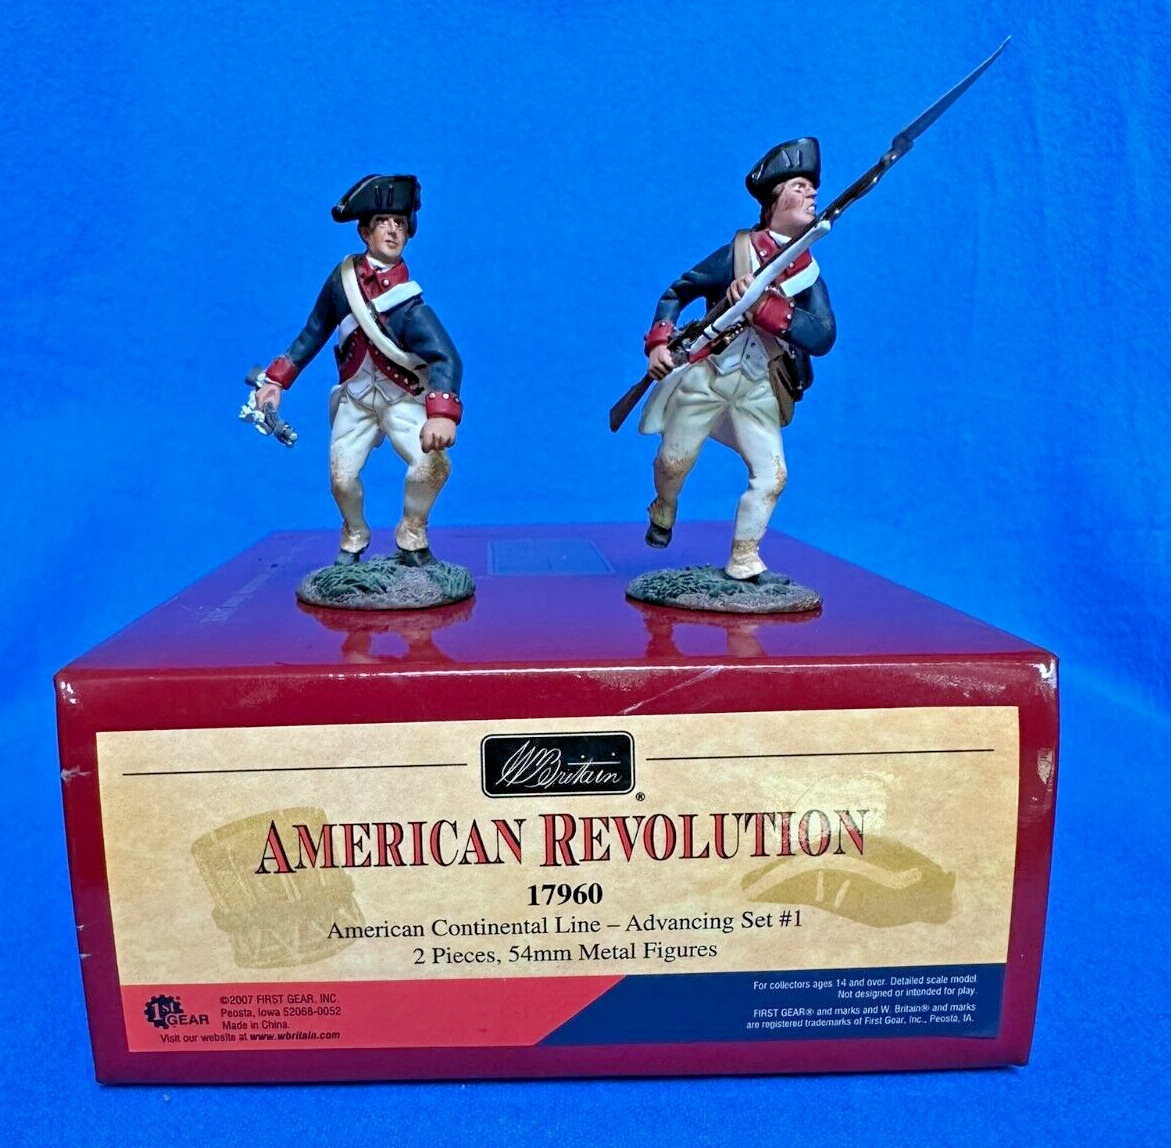 W. Britain 17960 American Continental Line, Advancing Set #1, original packaging